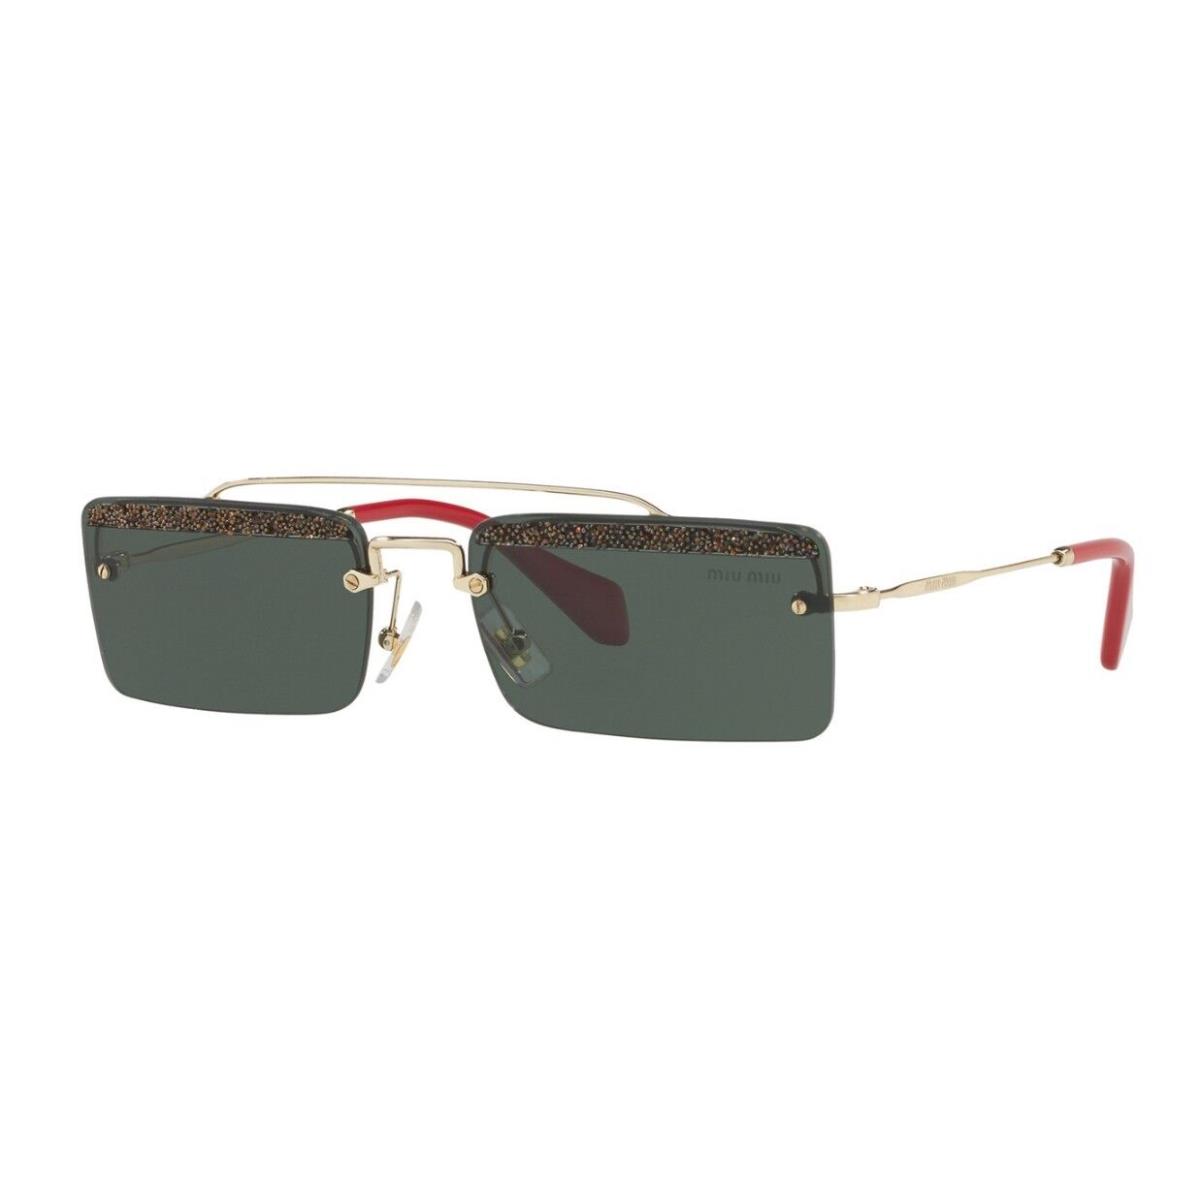 Miu Miu Societe SMU59T Pale Gold/green KI6/3O1 Sunglasses - Frame: Pale Gold, Lens: Green